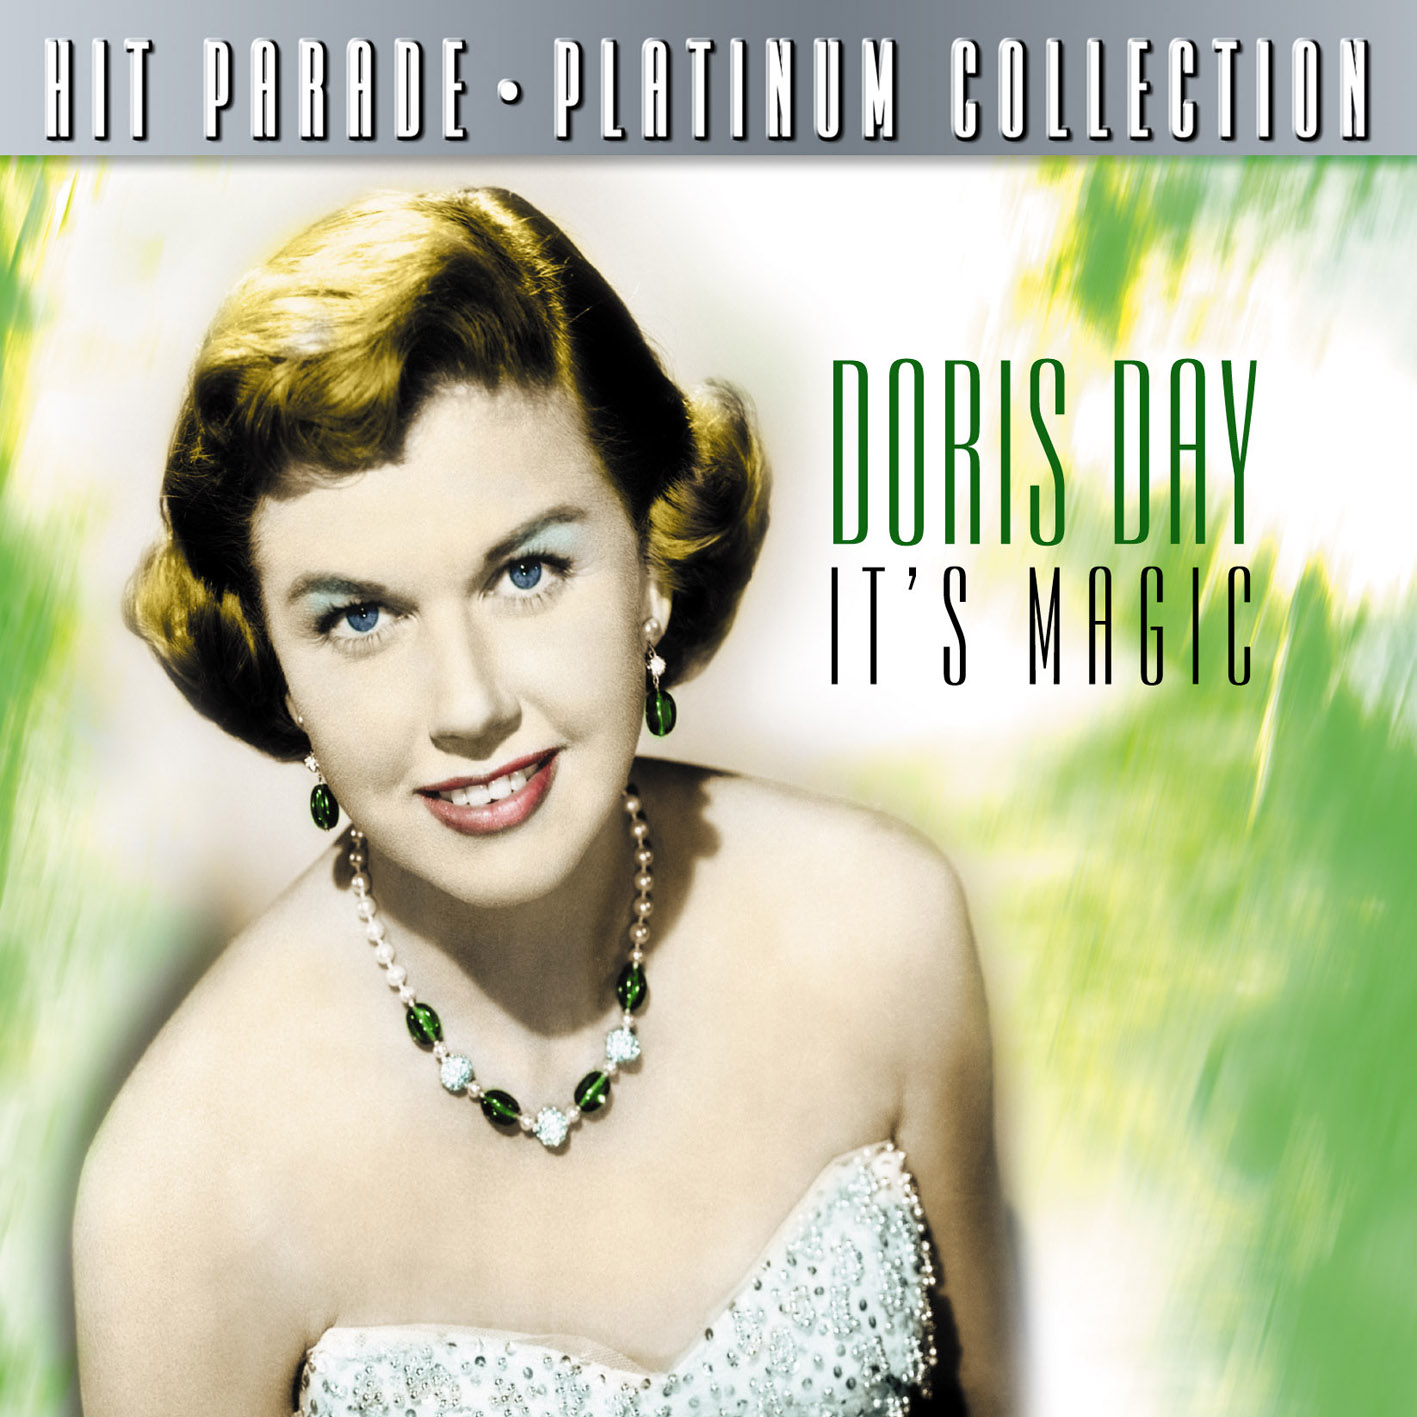 Hit Parade Platinum Collection Doris Day It's Magic